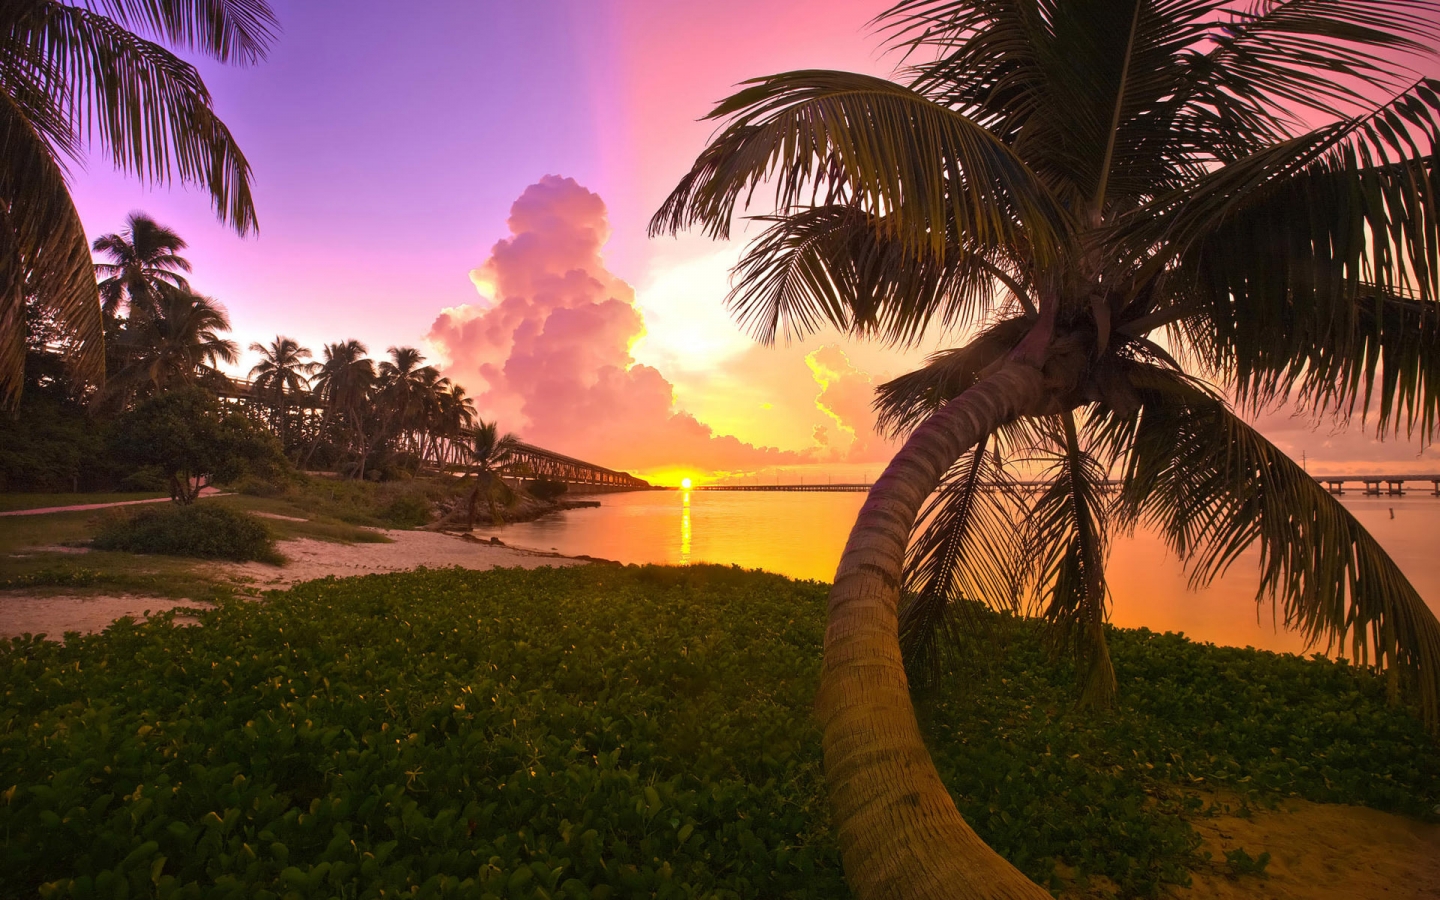 Late Beach Sunset for 1440 x 900 widescreen resolution